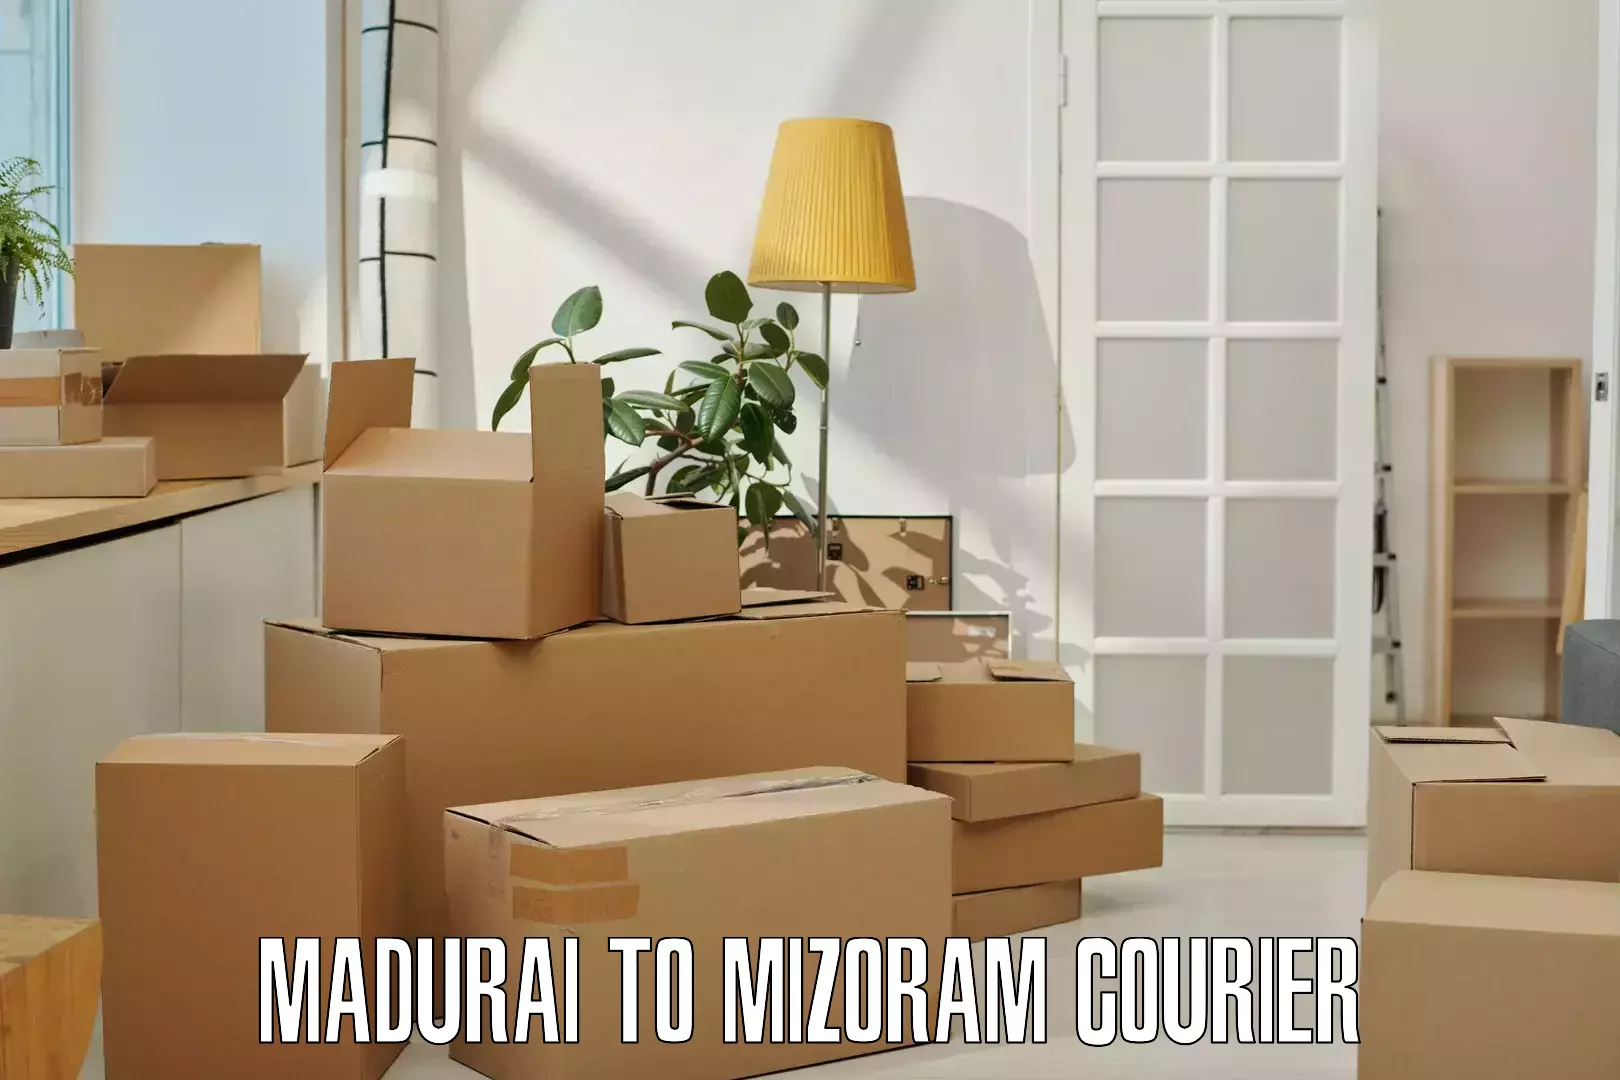 User-friendly courier app Madurai to Mizoram